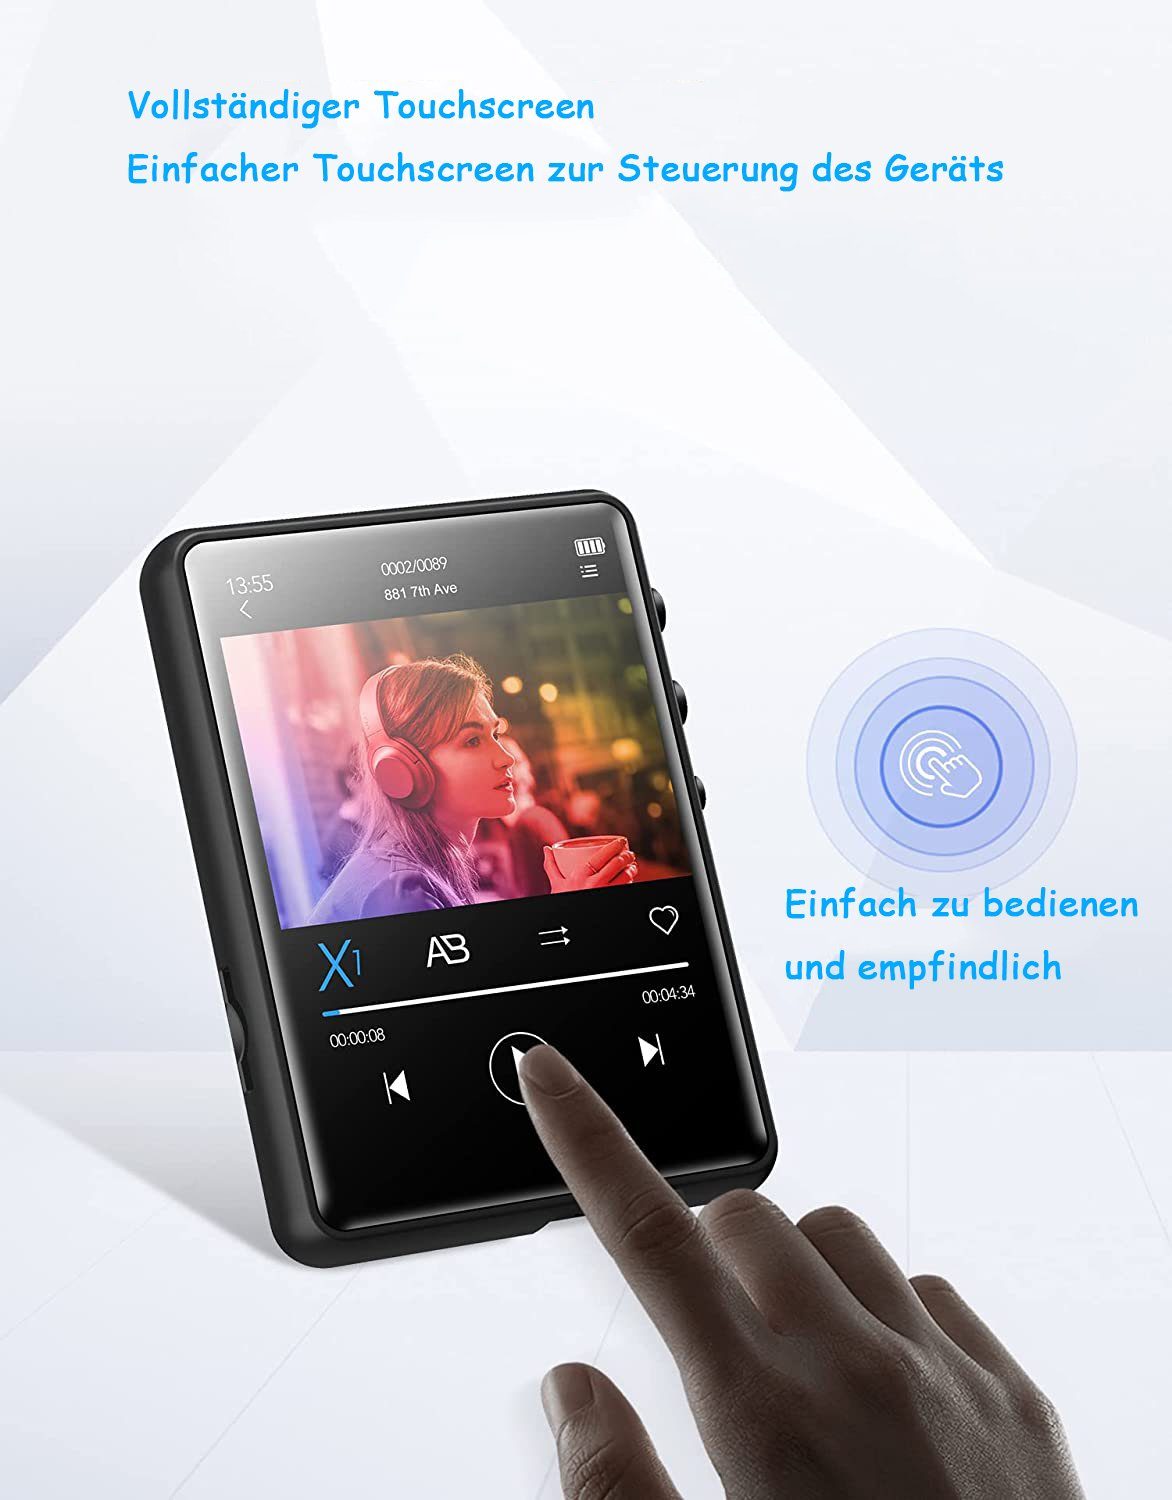 16GB MP3-Player GelldG MP3 Bluetooth Touchscreen HiFi MP3-Player 5.0, Player